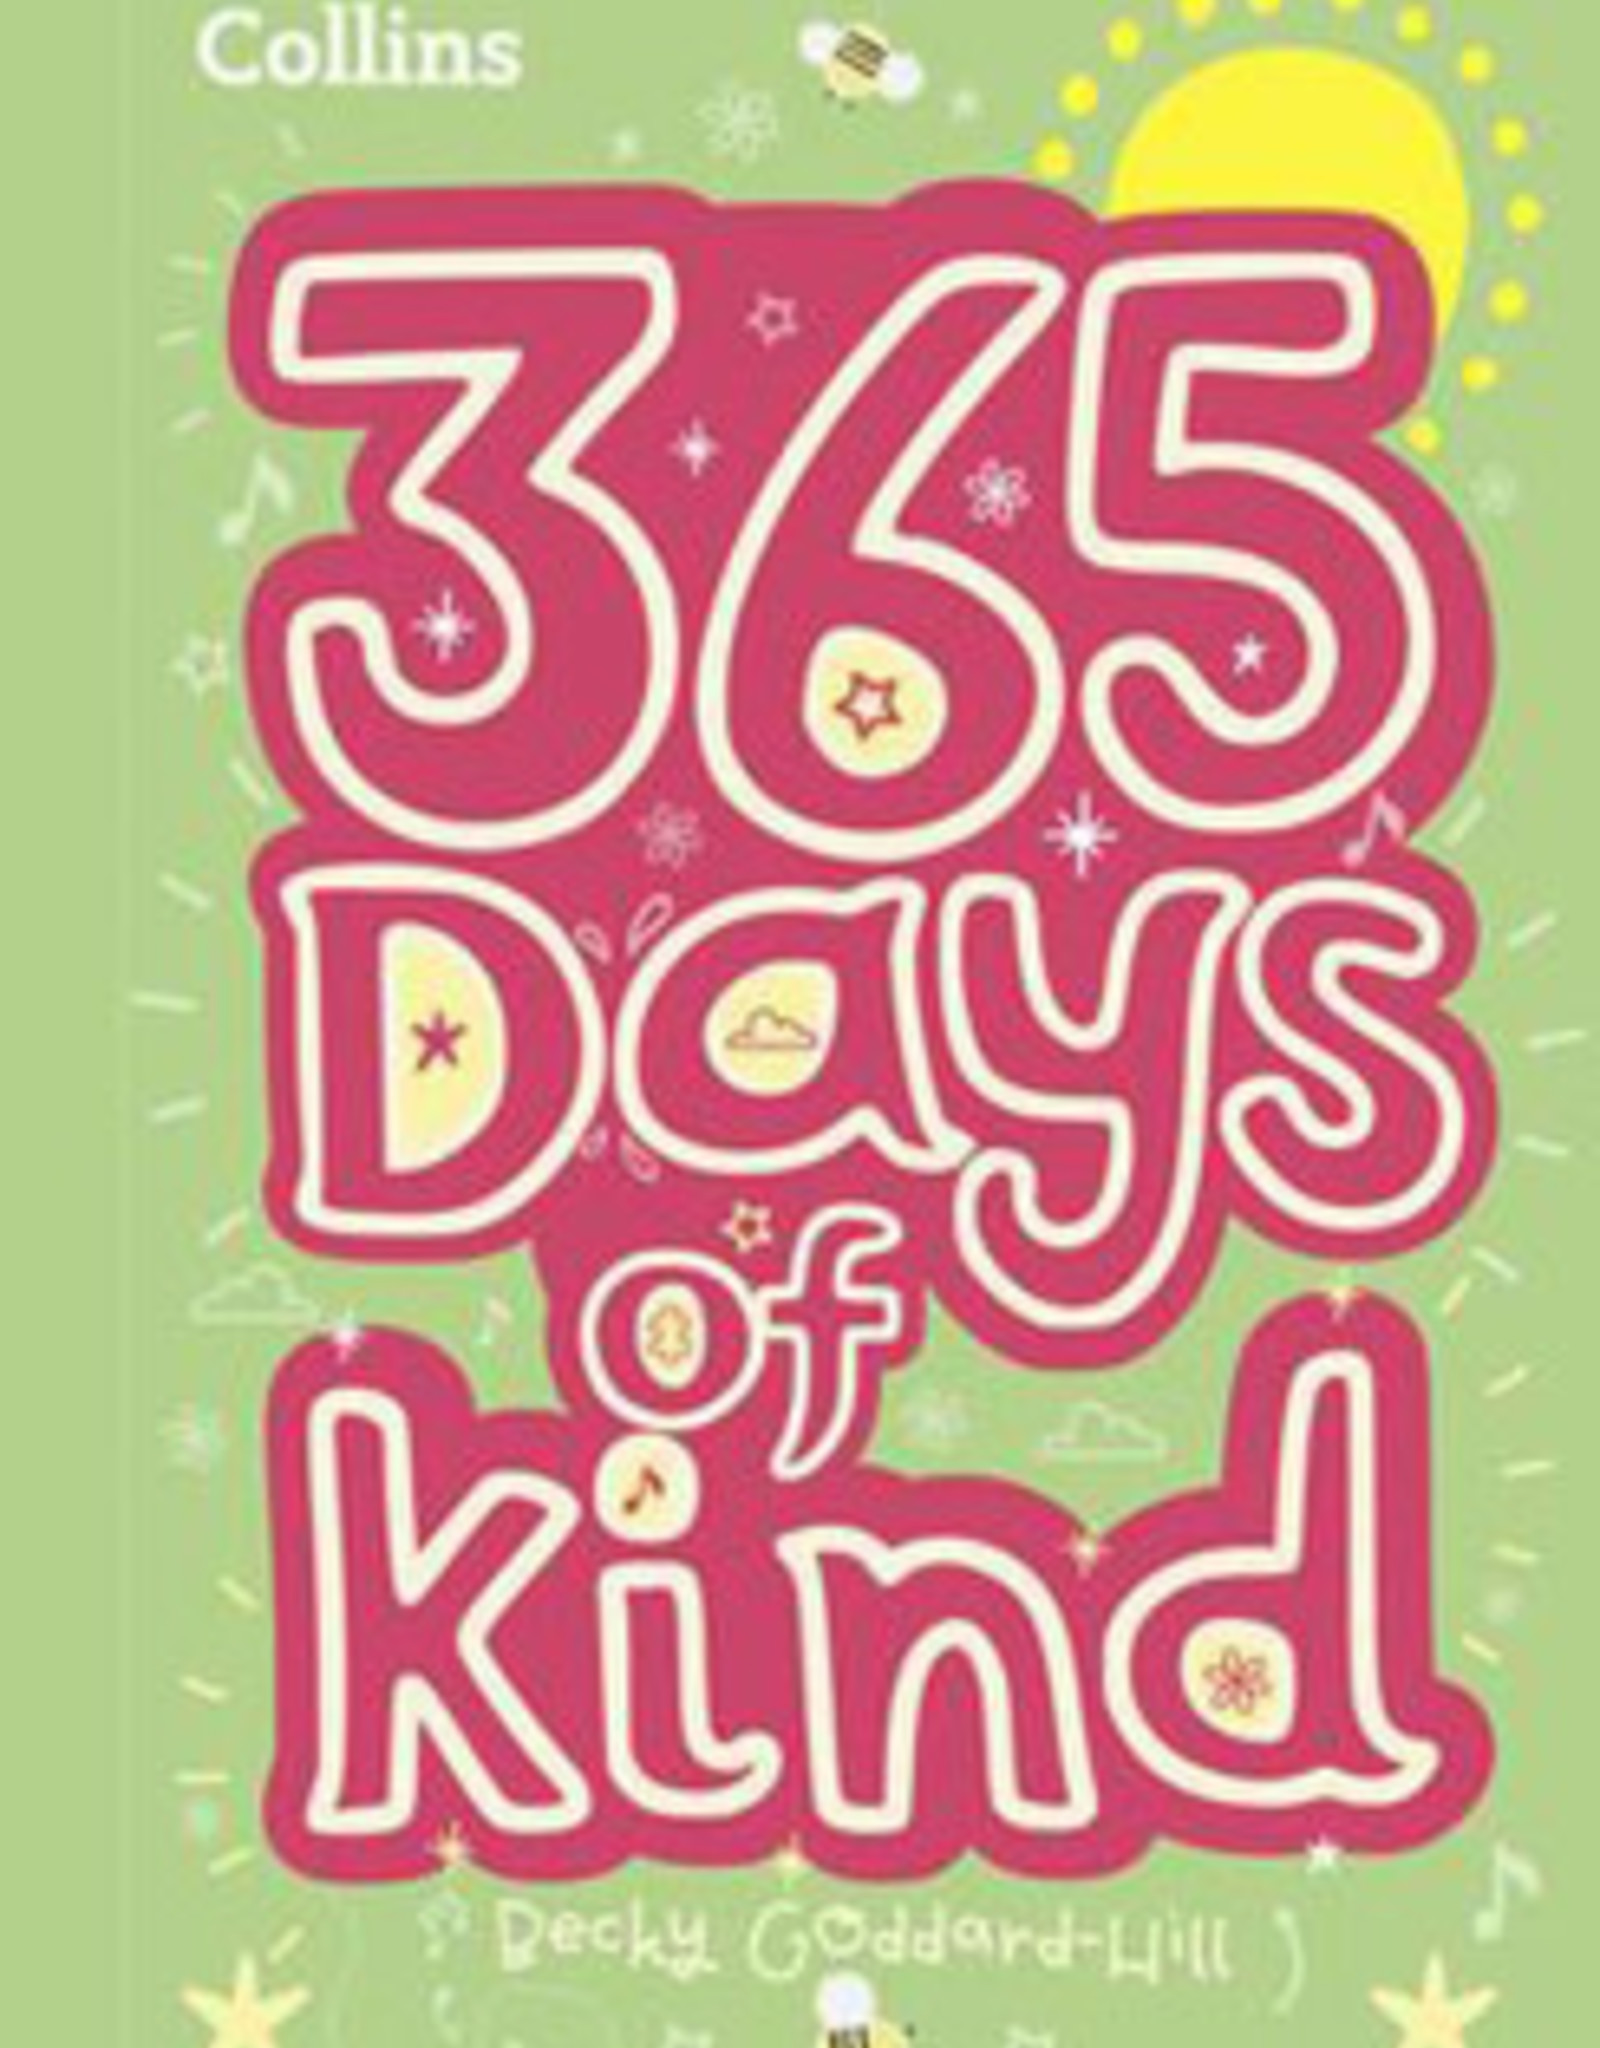 365 Days of Kind